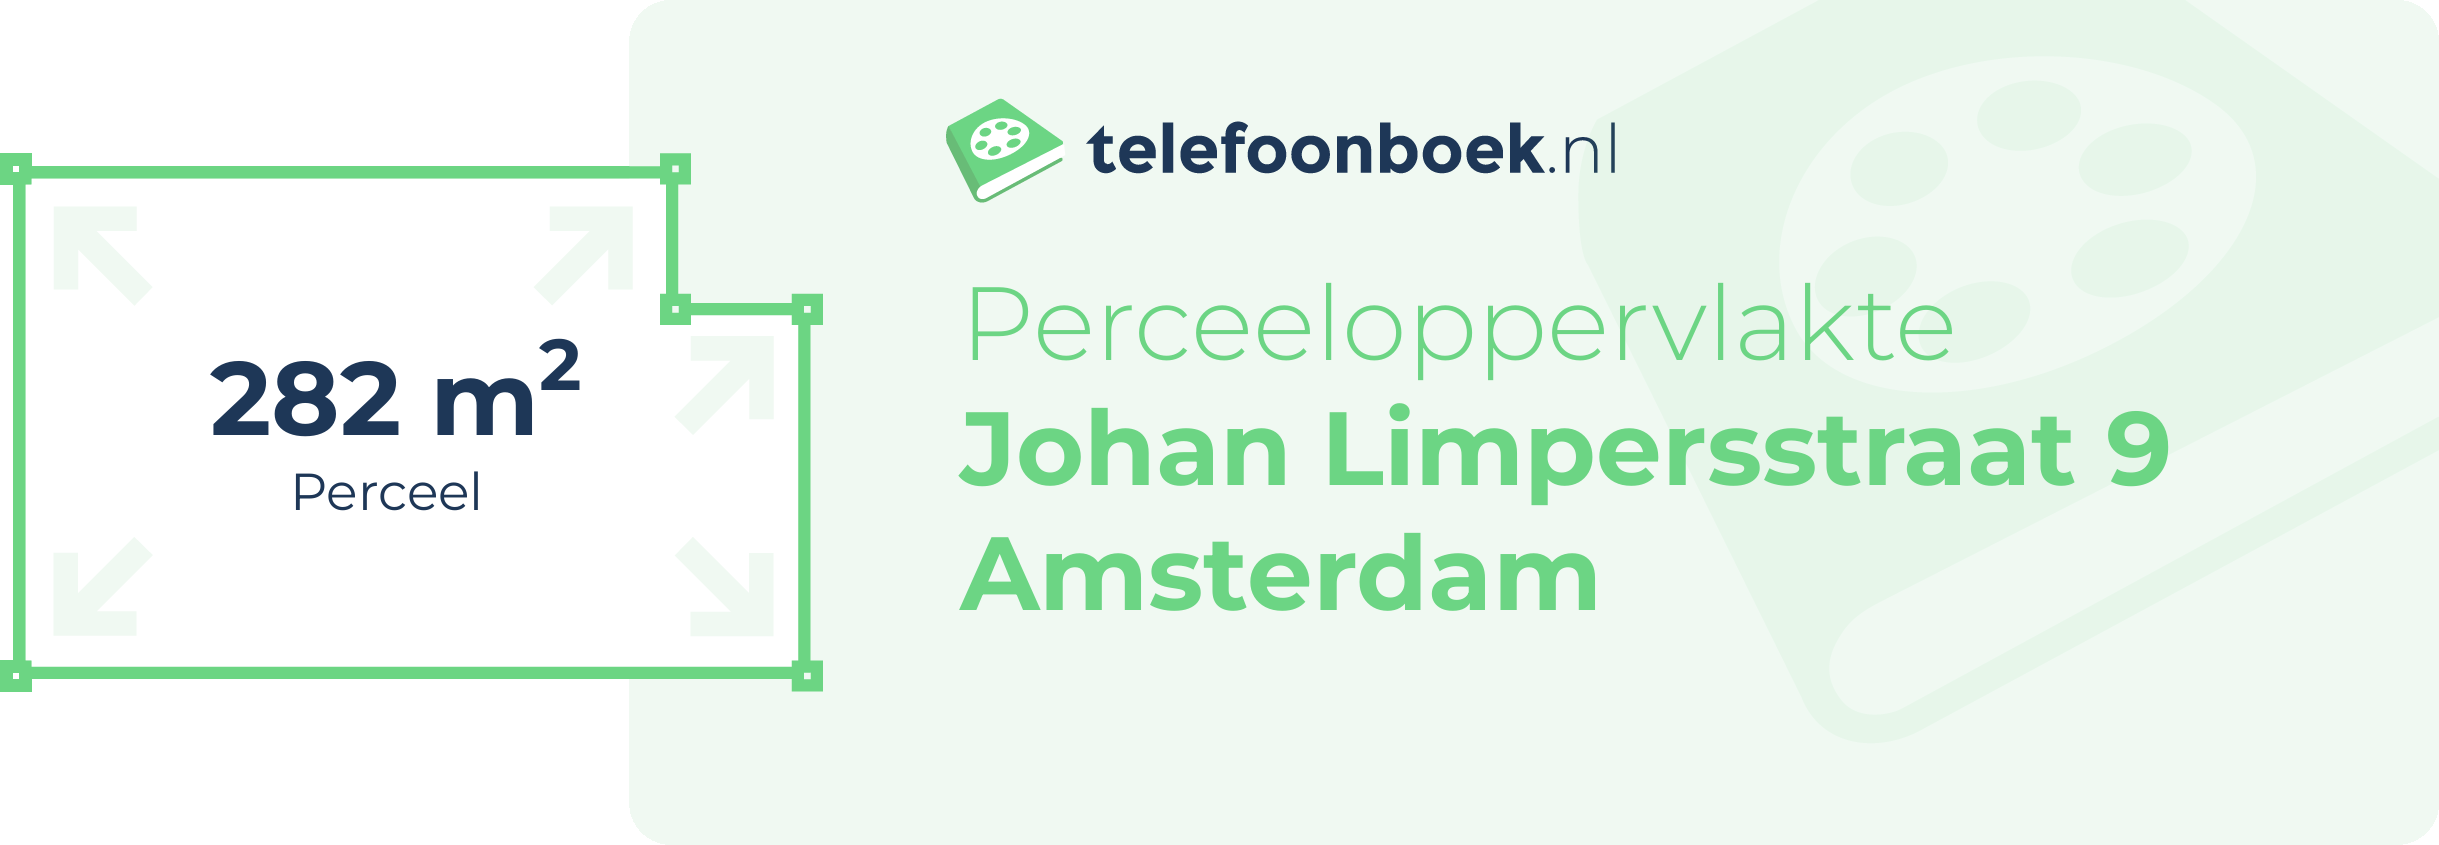 Perceeloppervlakte Johan Limpersstraat 9 Amsterdam